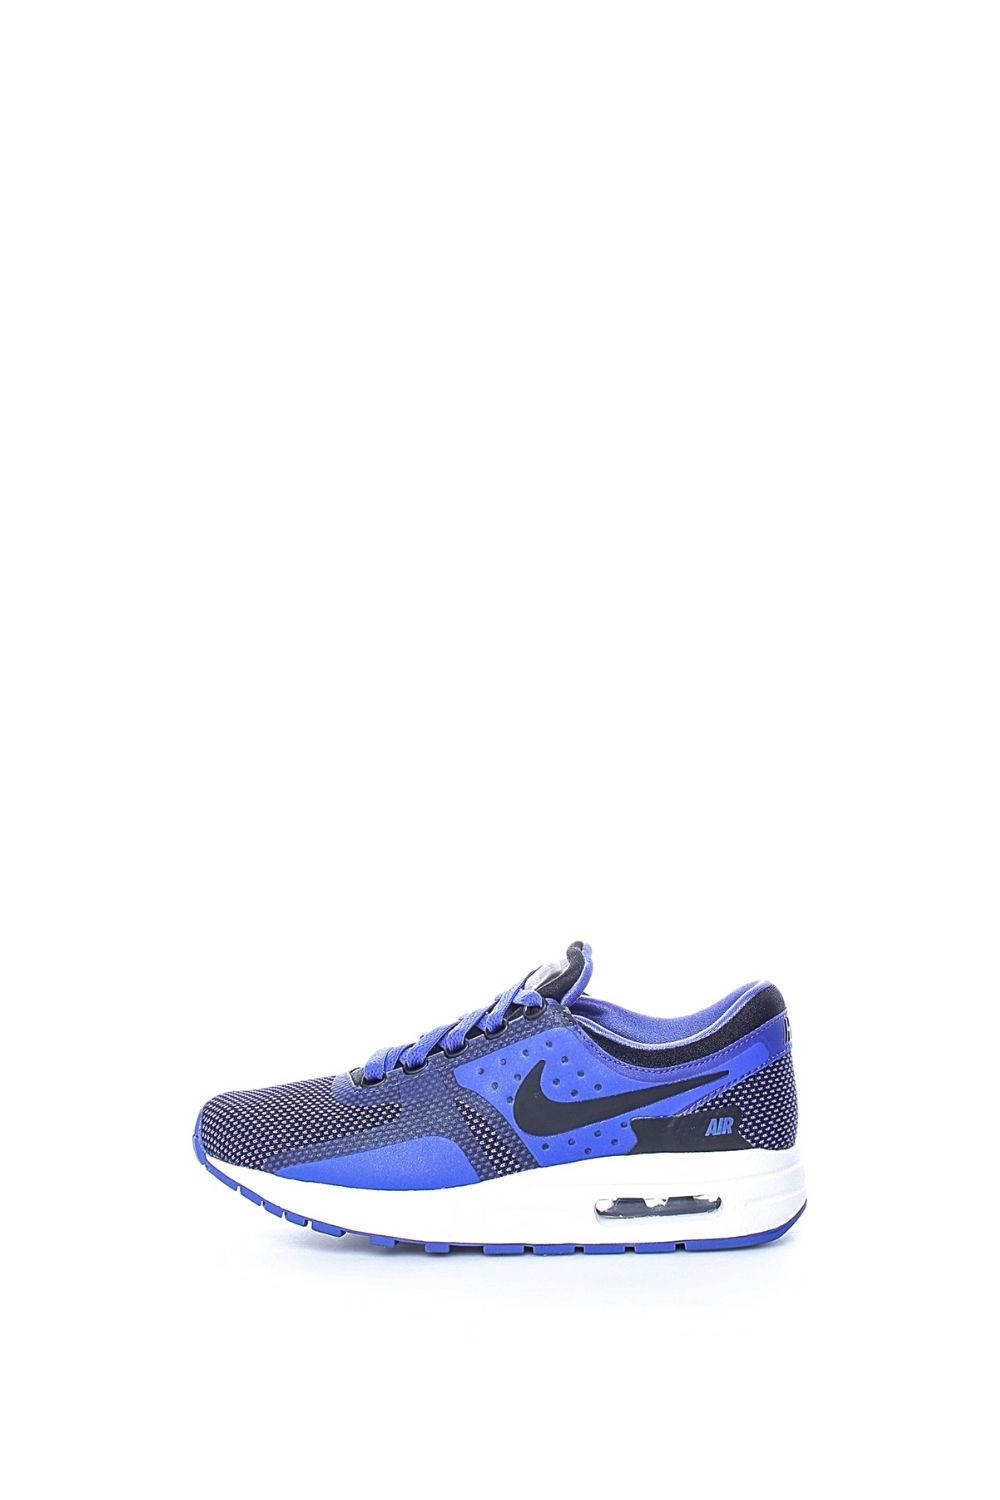 NIKE - Παιδικά αθλητικά παπούτσια NIKE AIR MAX ZERO ESSENTIAL μπλε Παιδικά/Boys/Παπούτσια/Αθλητικά